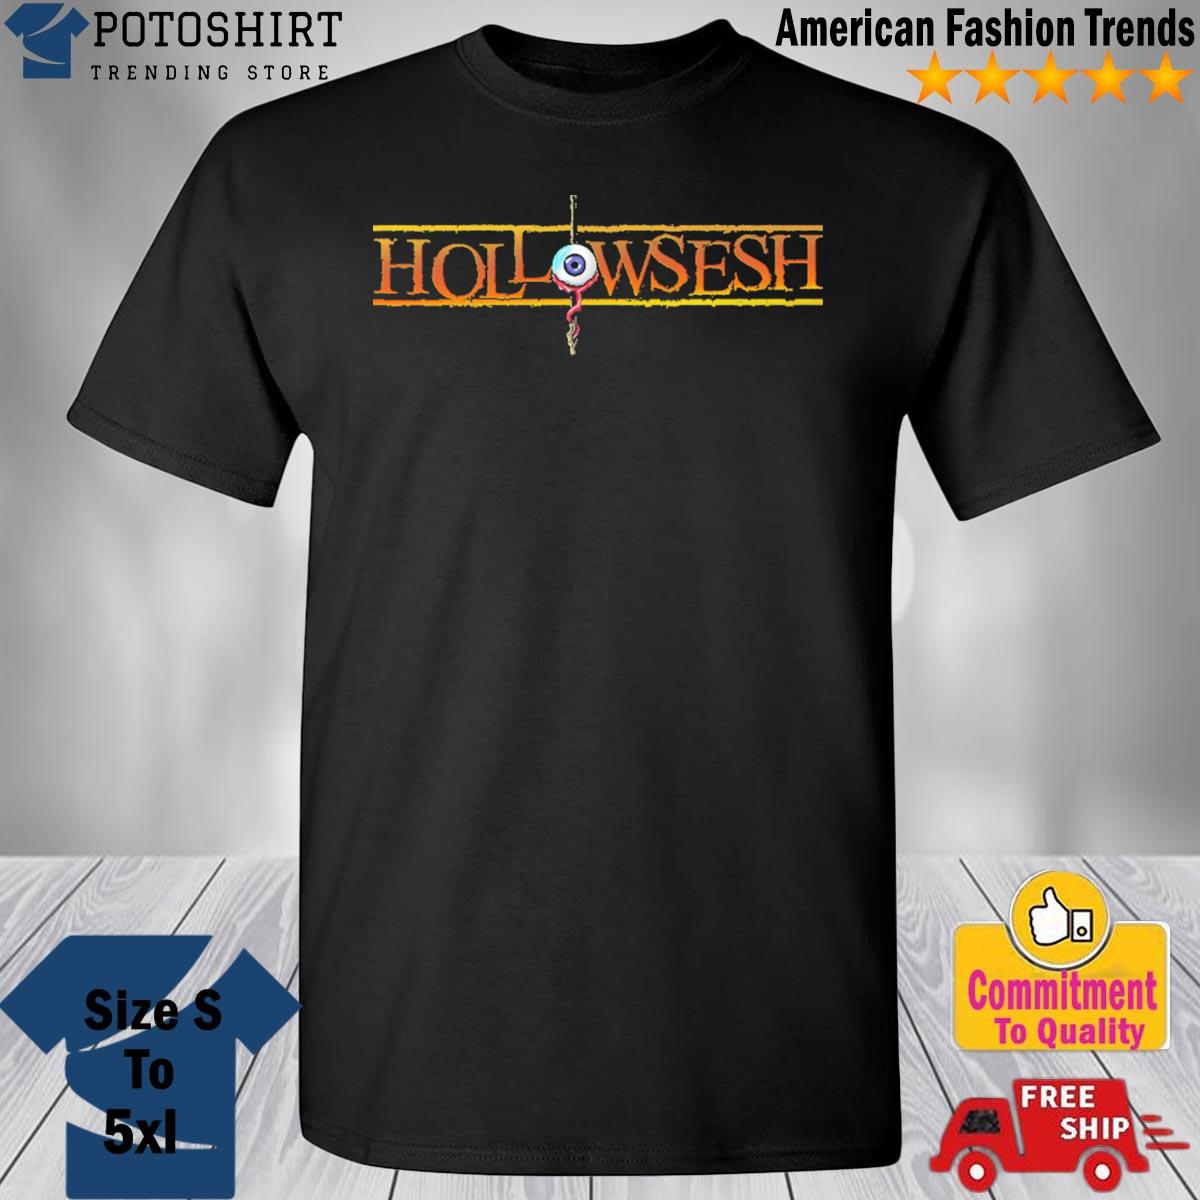 Hollowsquad La Merch Hsps Hollowsesh T Shirt